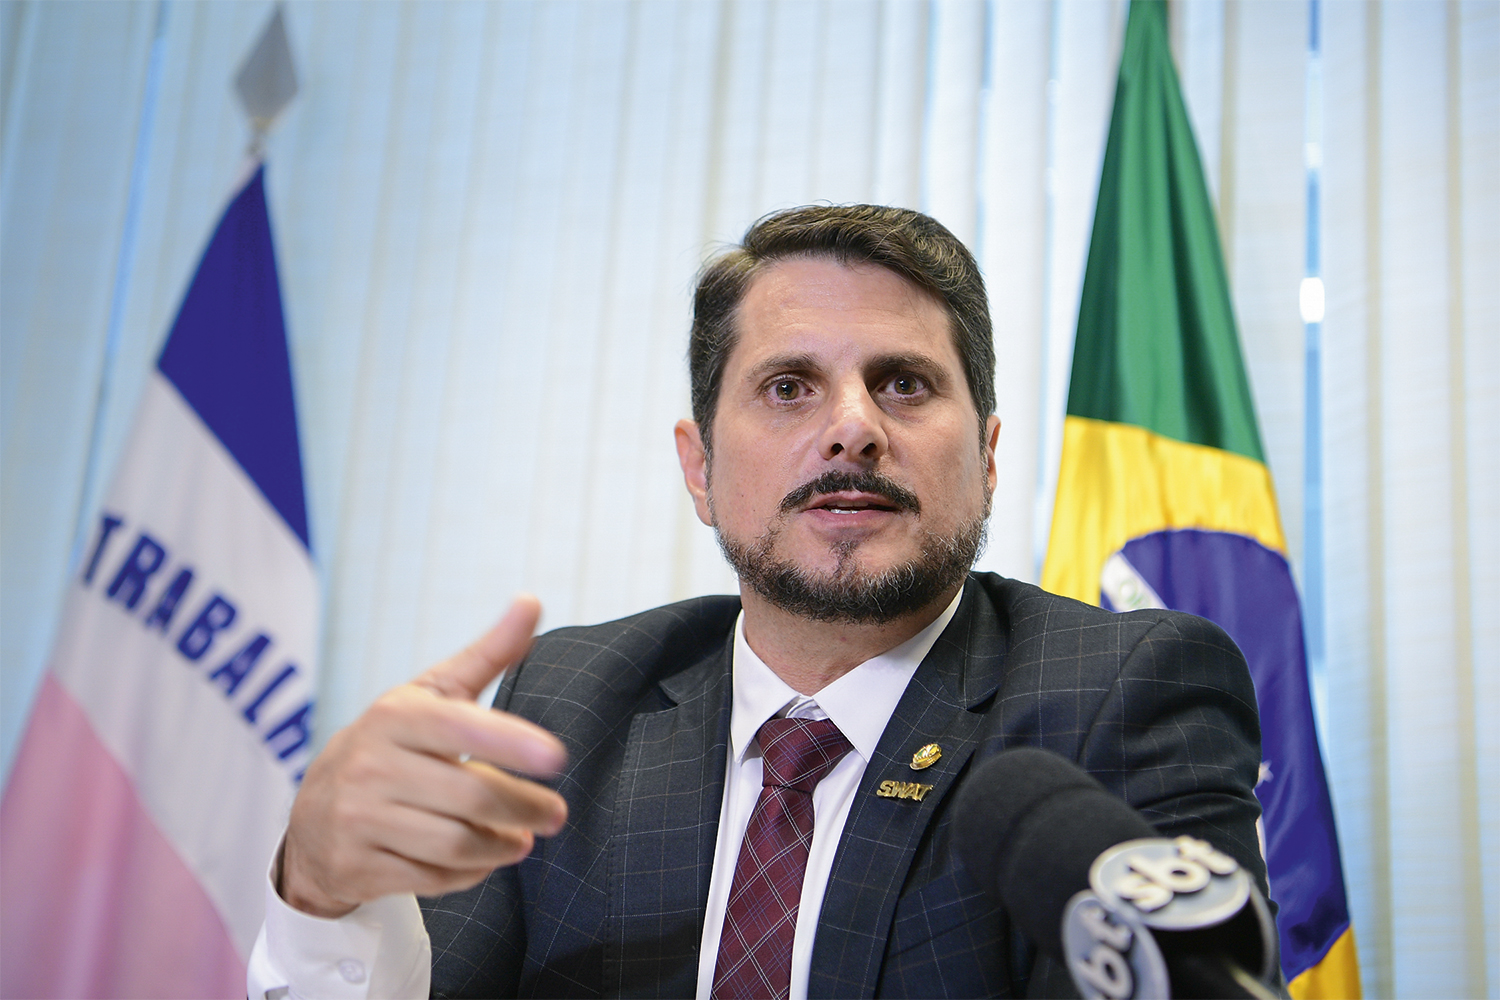 TESTEMUNHA - Marcos do Val: o aliado que envolveu o ex-presidente na trama -